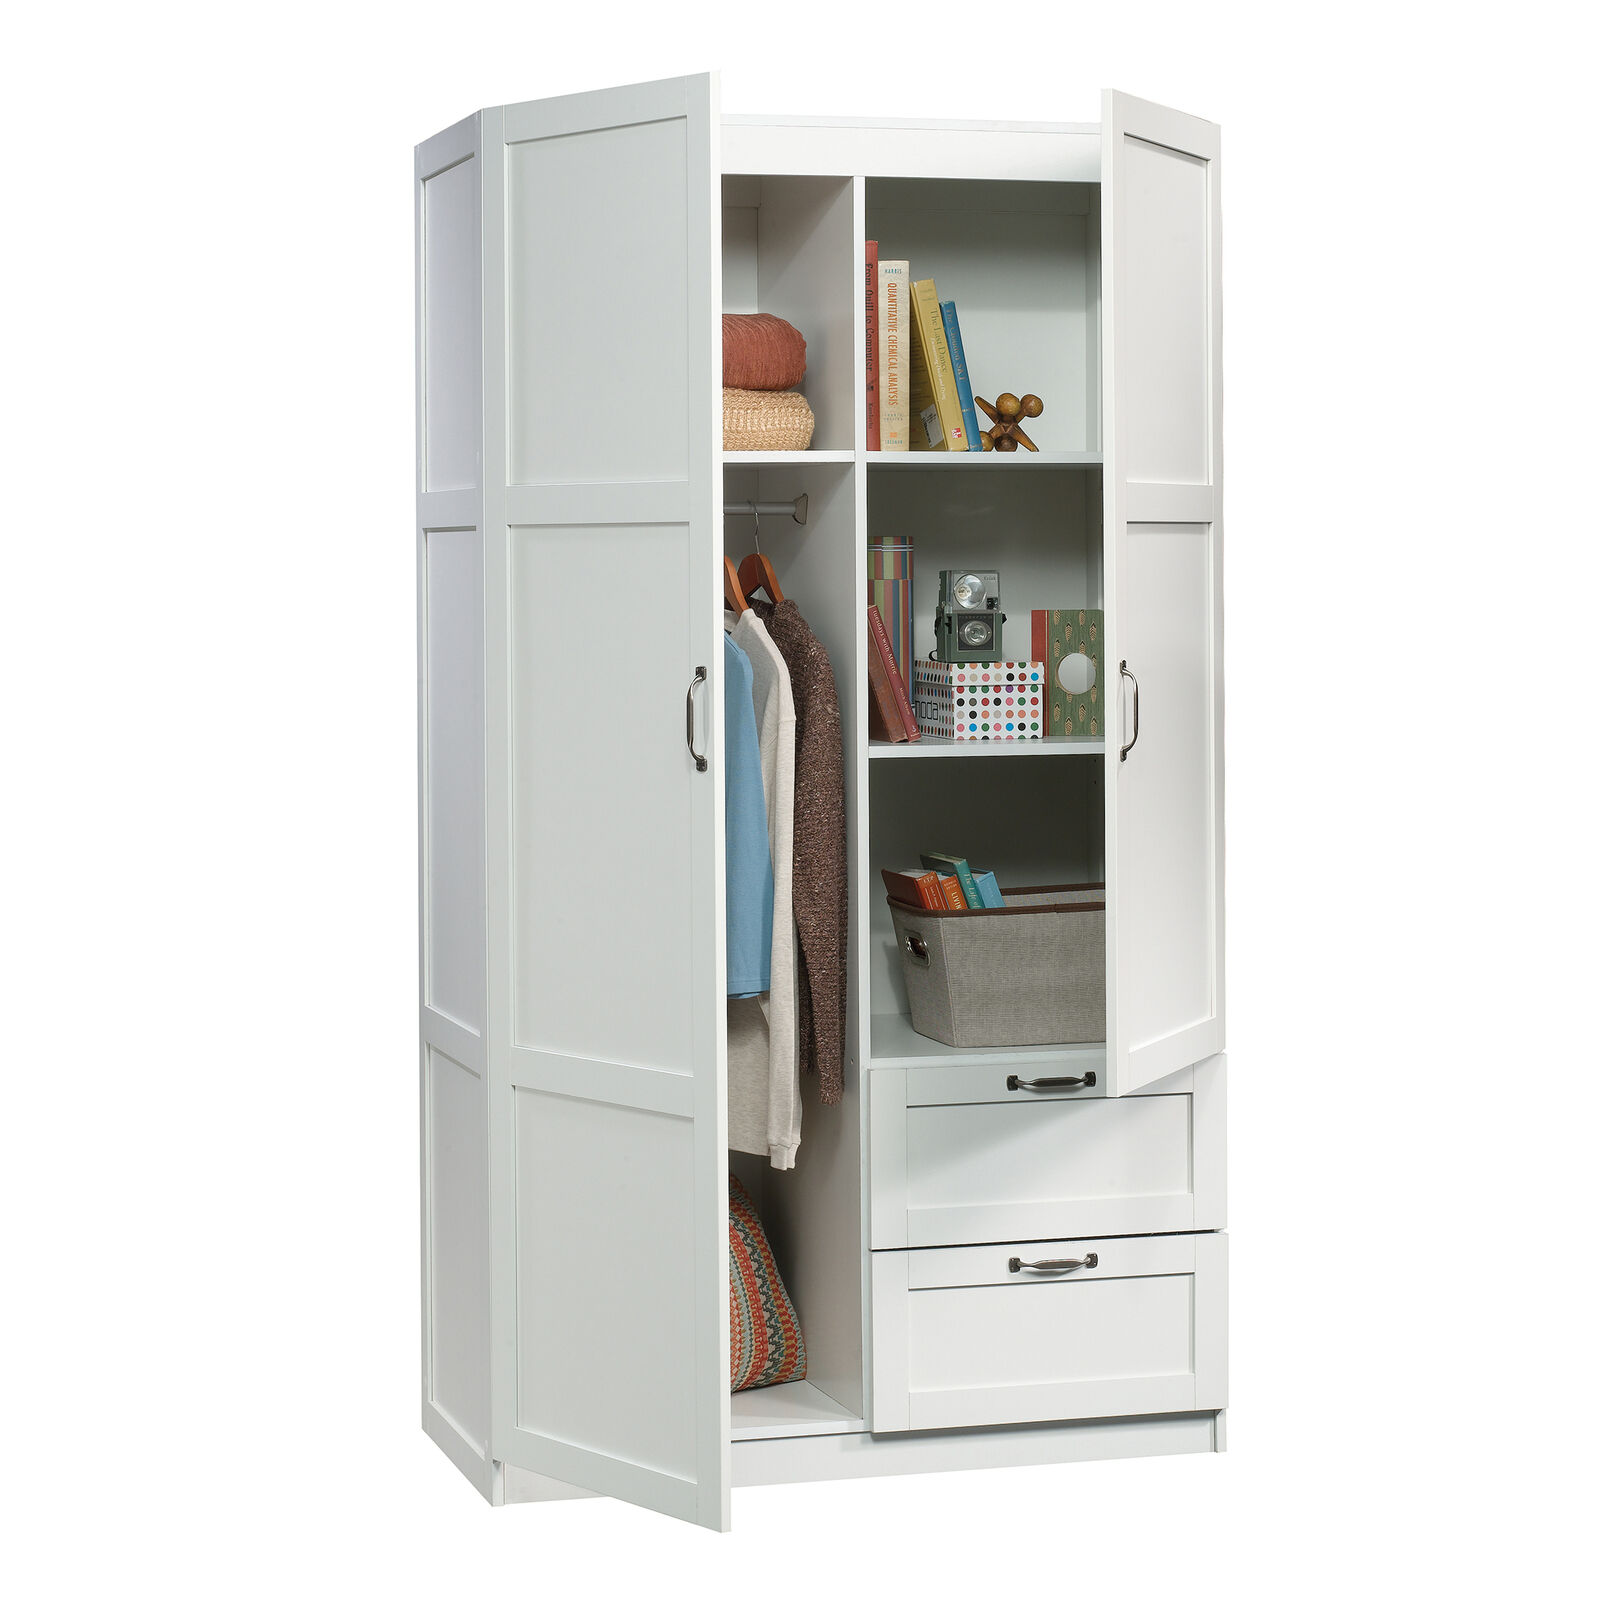 Wardrobe Armoire Garment Organizer 2-drawer Shelf Storage Home Bedroom Furniture